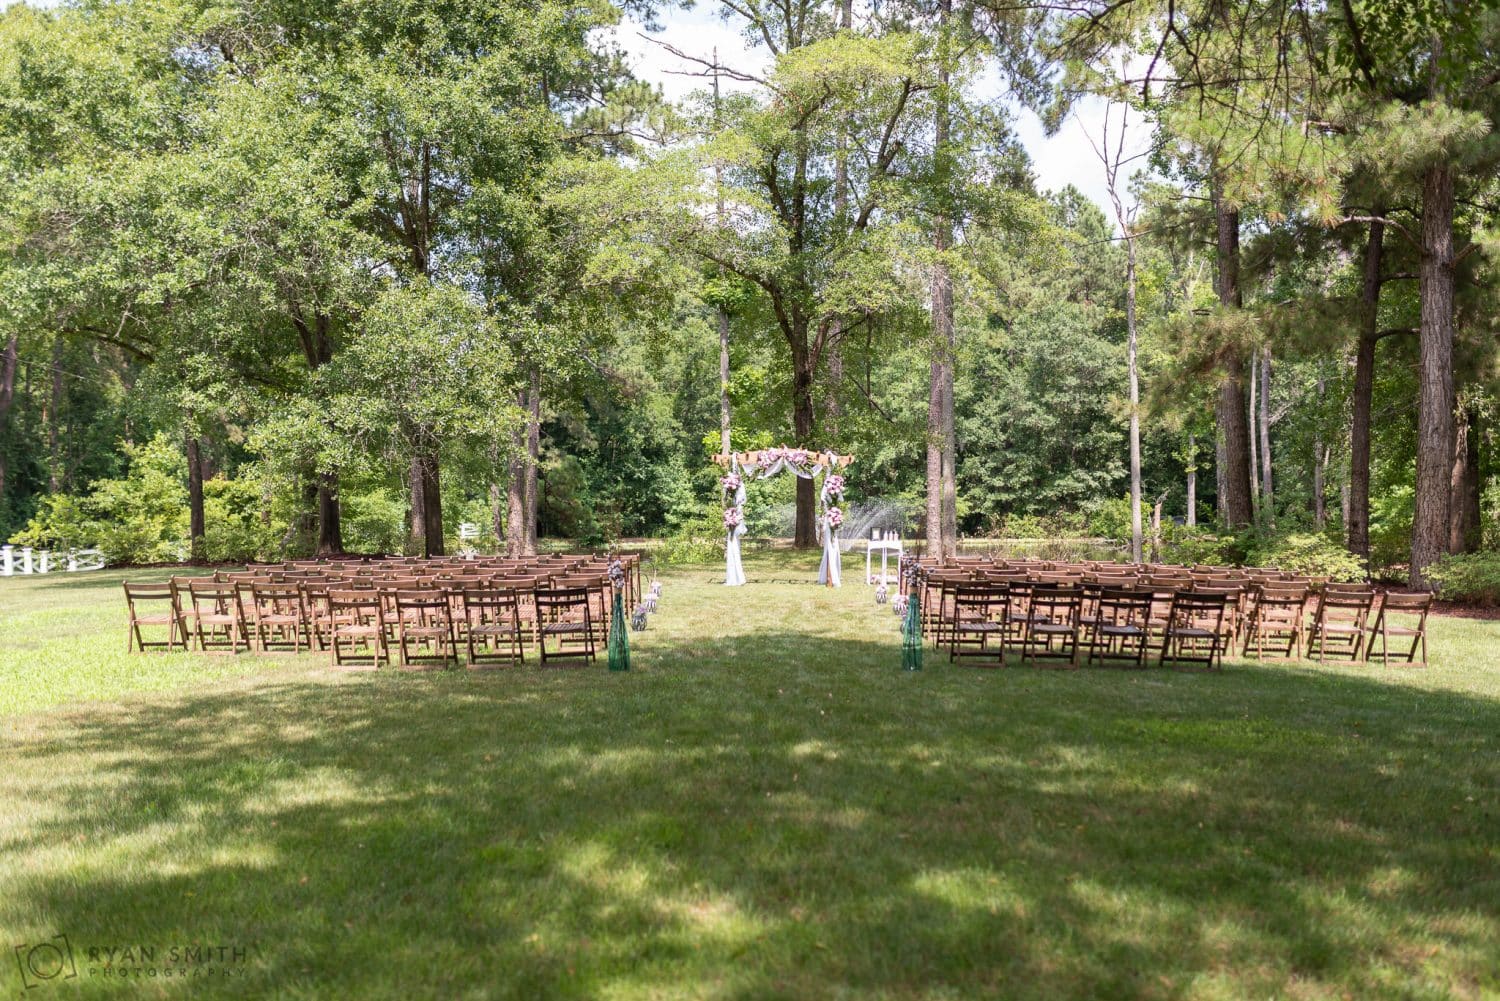 Ceremony location by the lake Wildberry Farm